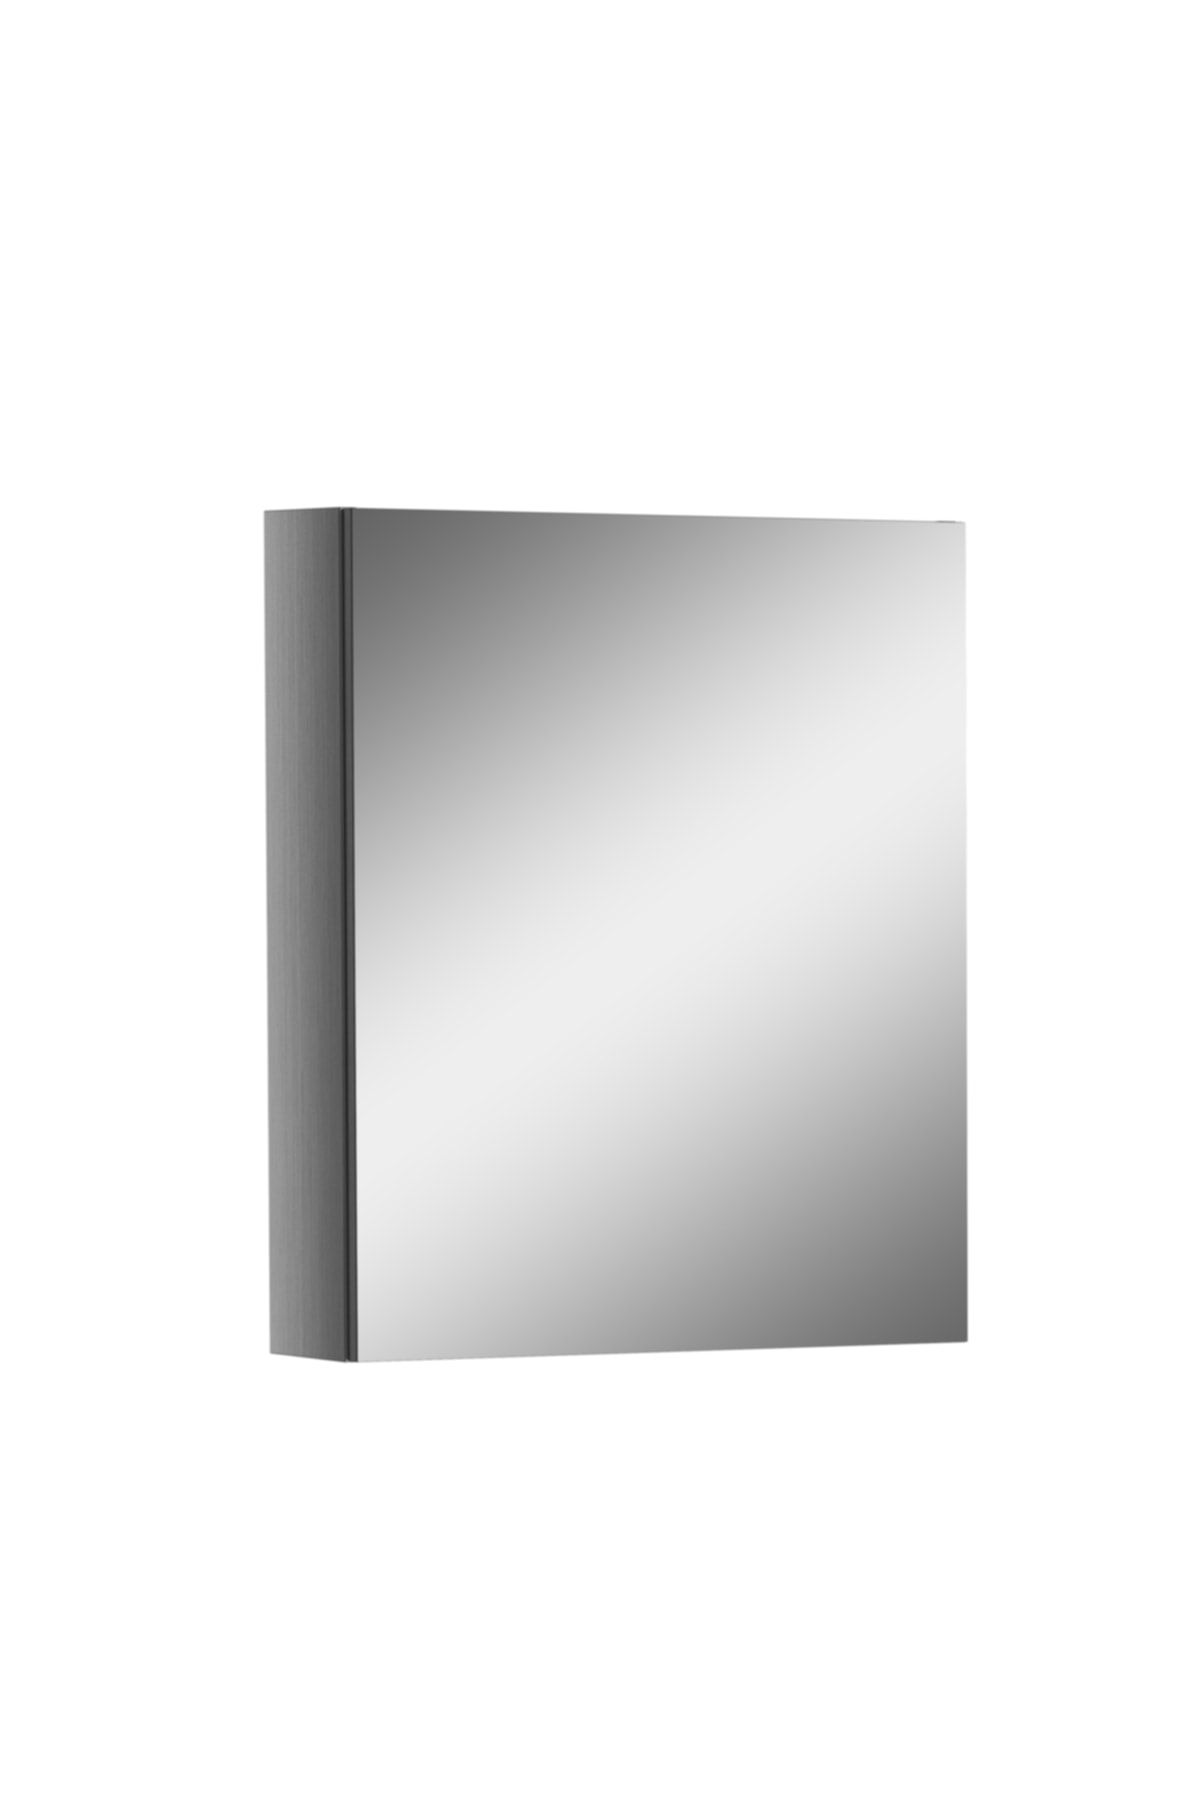 VitrA Arkitekt 66187 Dolaplı Ayna, 60 Cm, Krom / Sağ